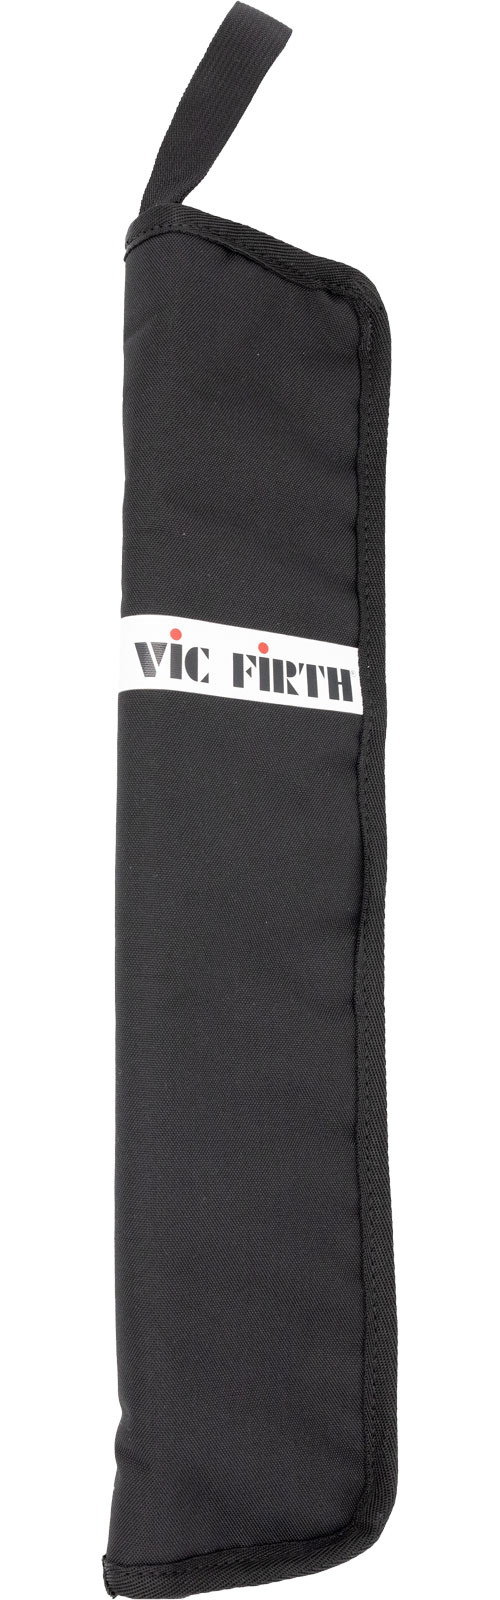 VIC FIRTH DRUMSTICK BAG VIC FIRTH ESSENTIAL - BLACK